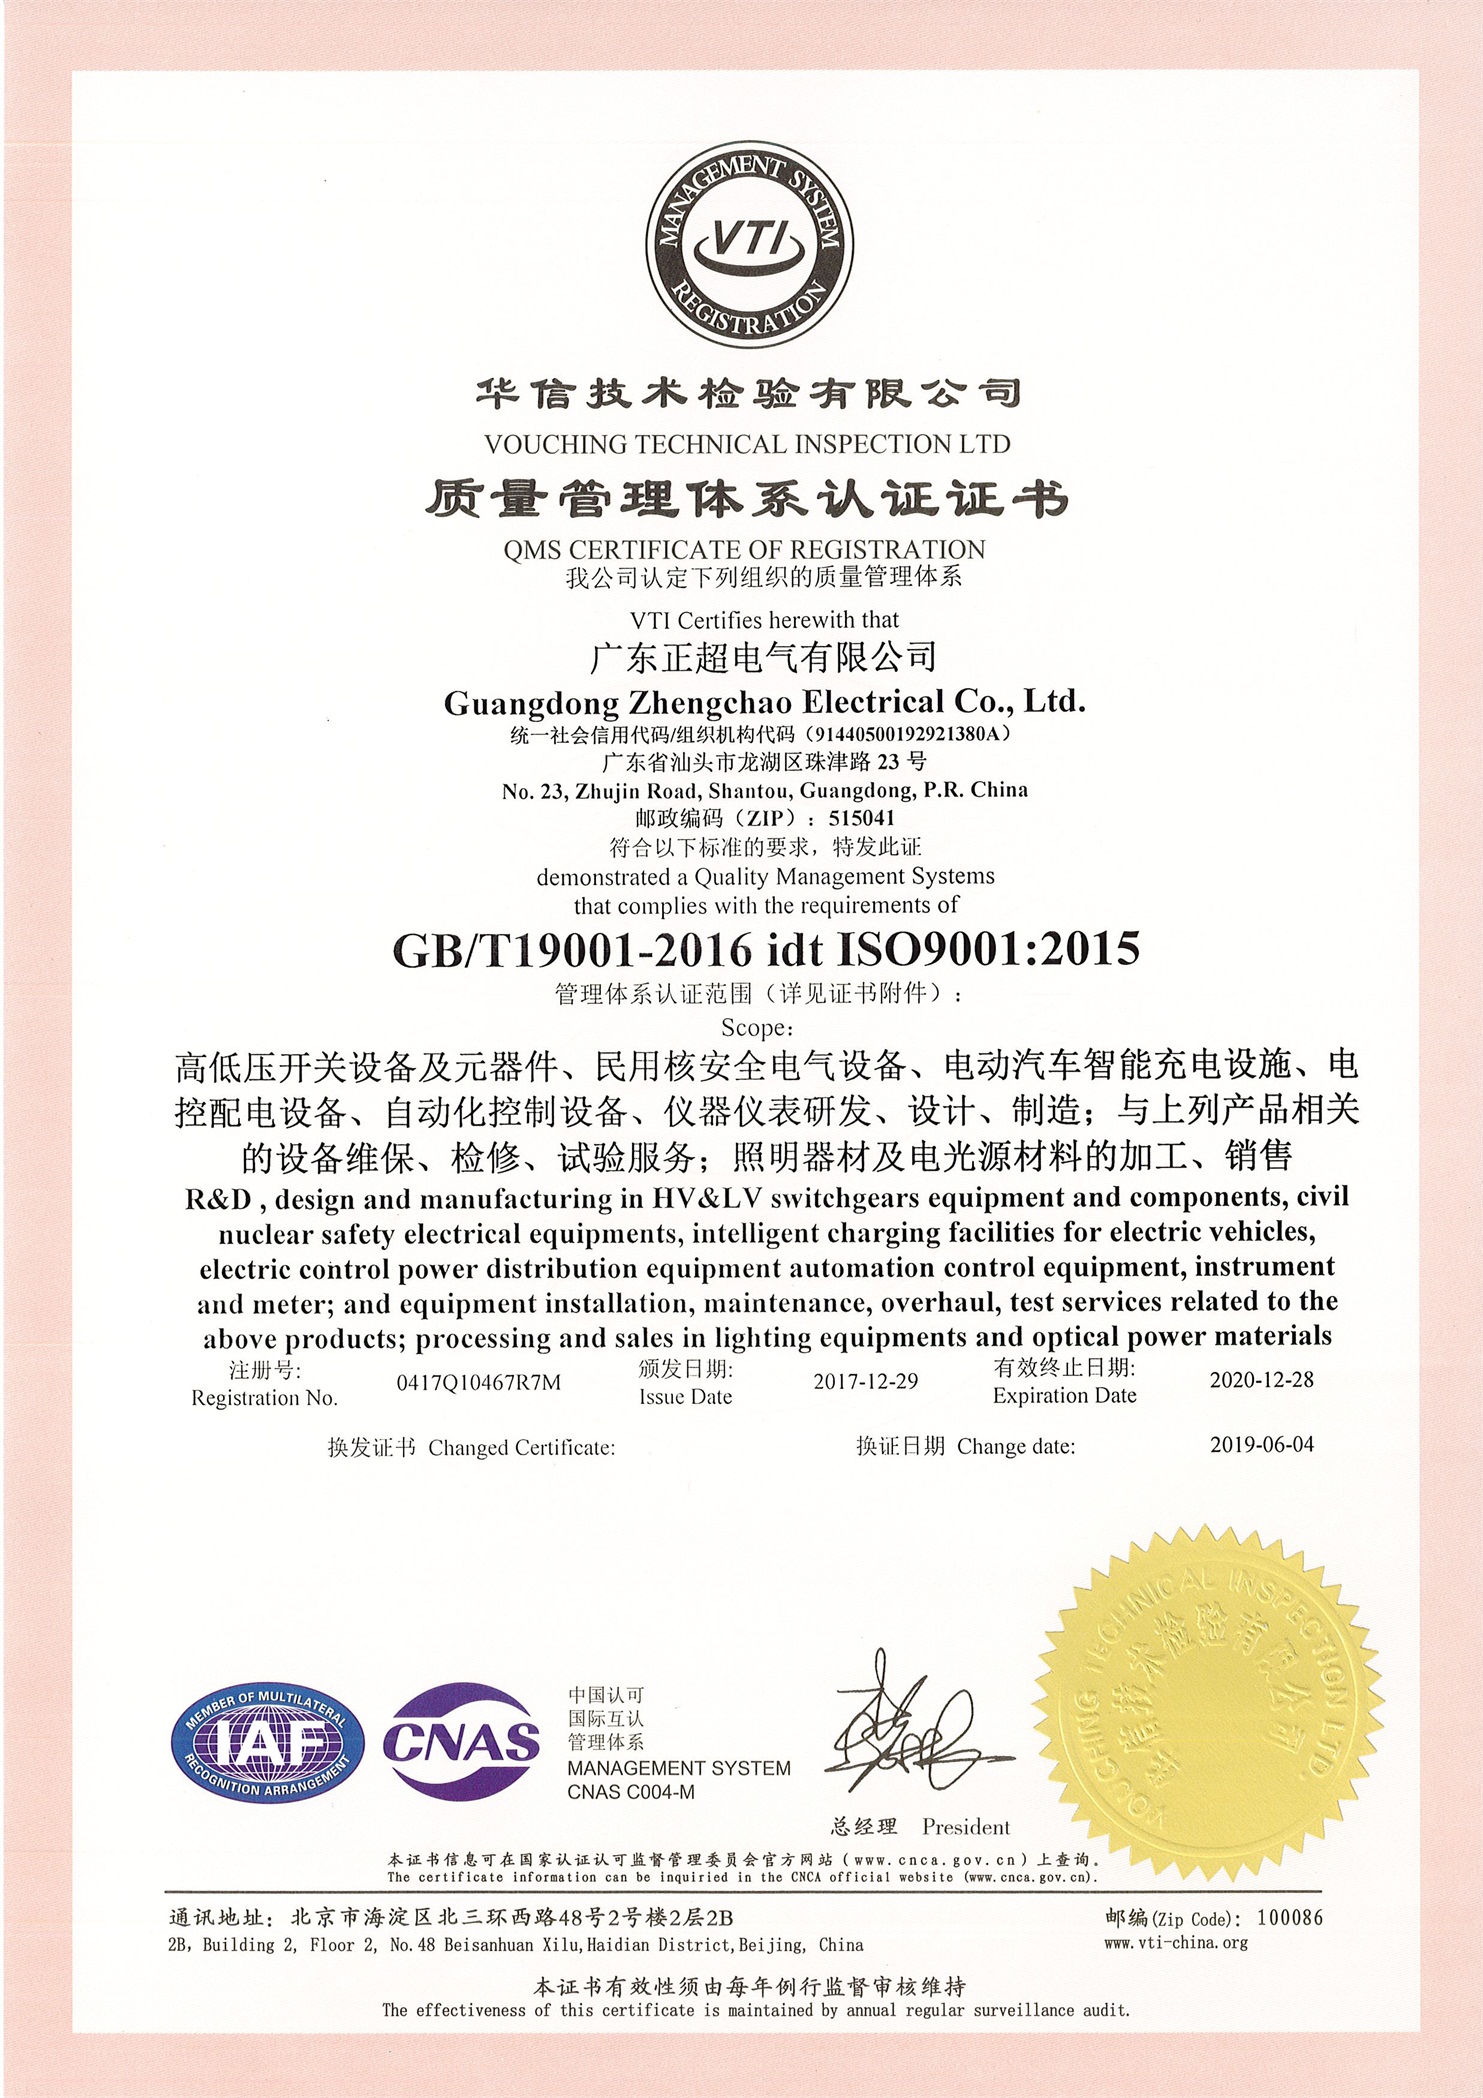 OMS Certificate of registration